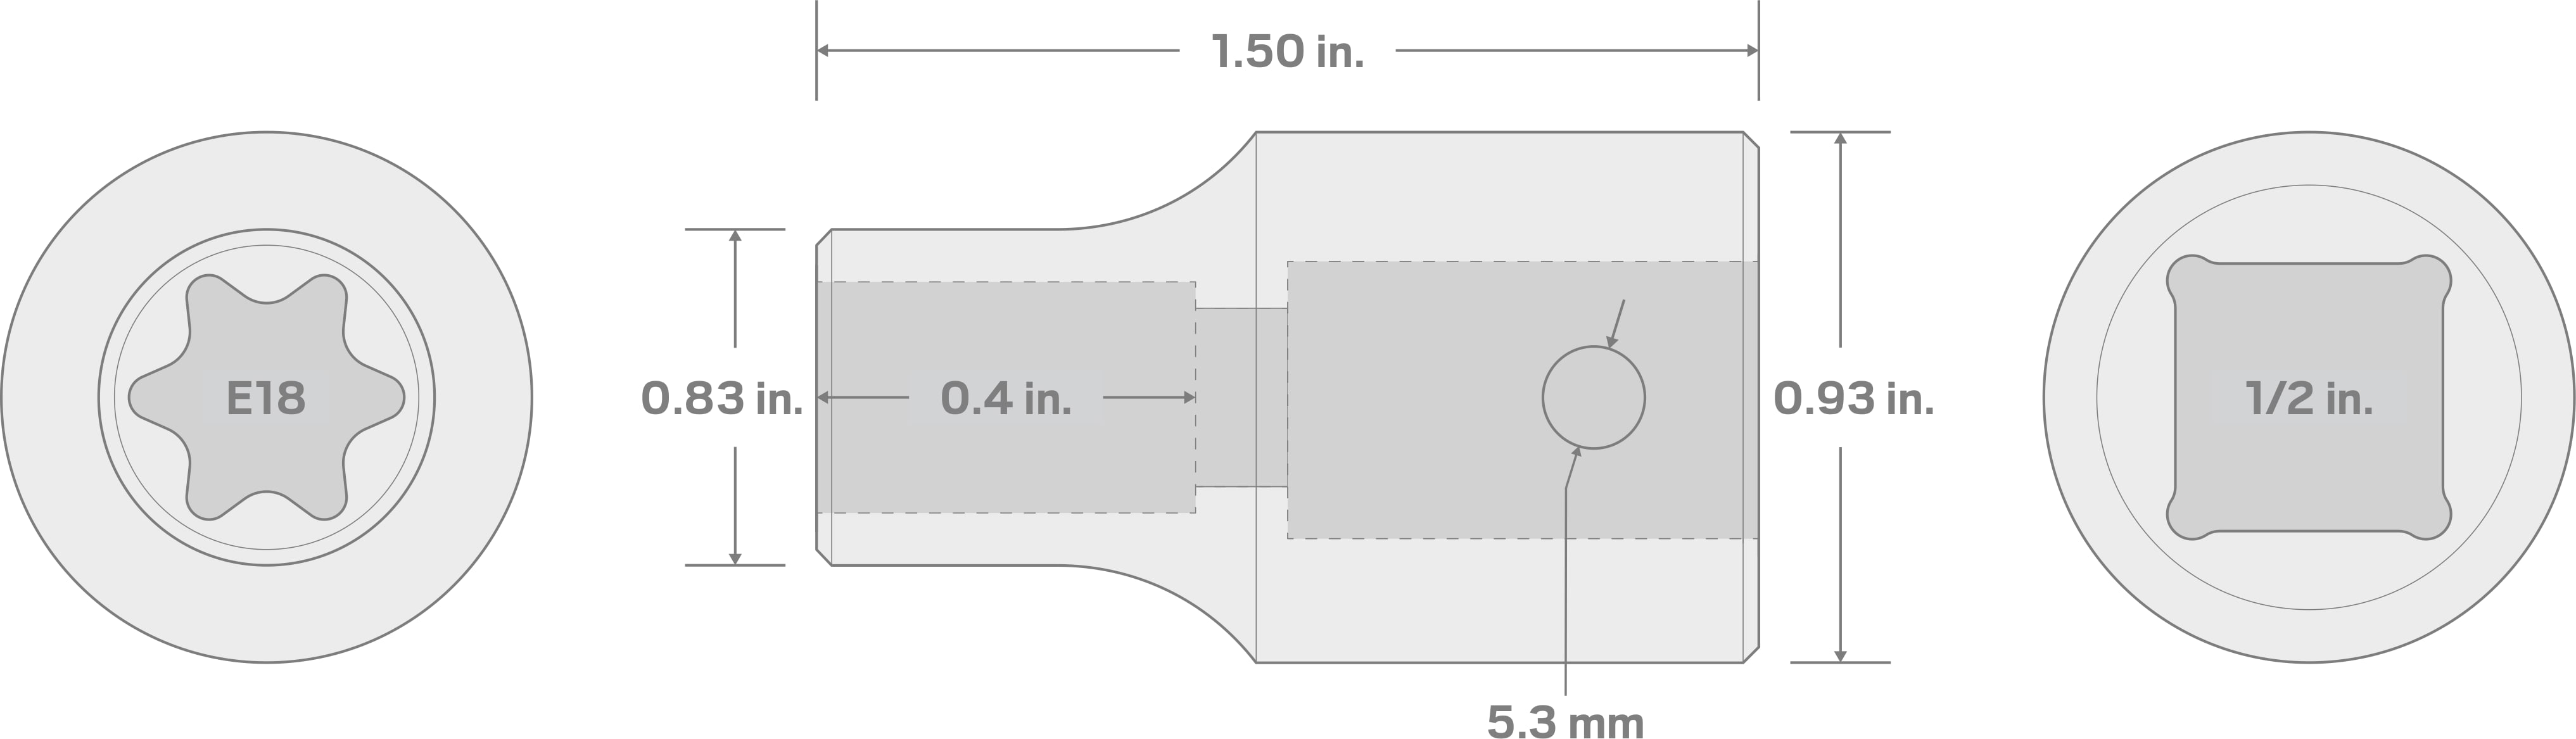 Specs for 1/2 Inch Drive x E18 External Star Impact Socket